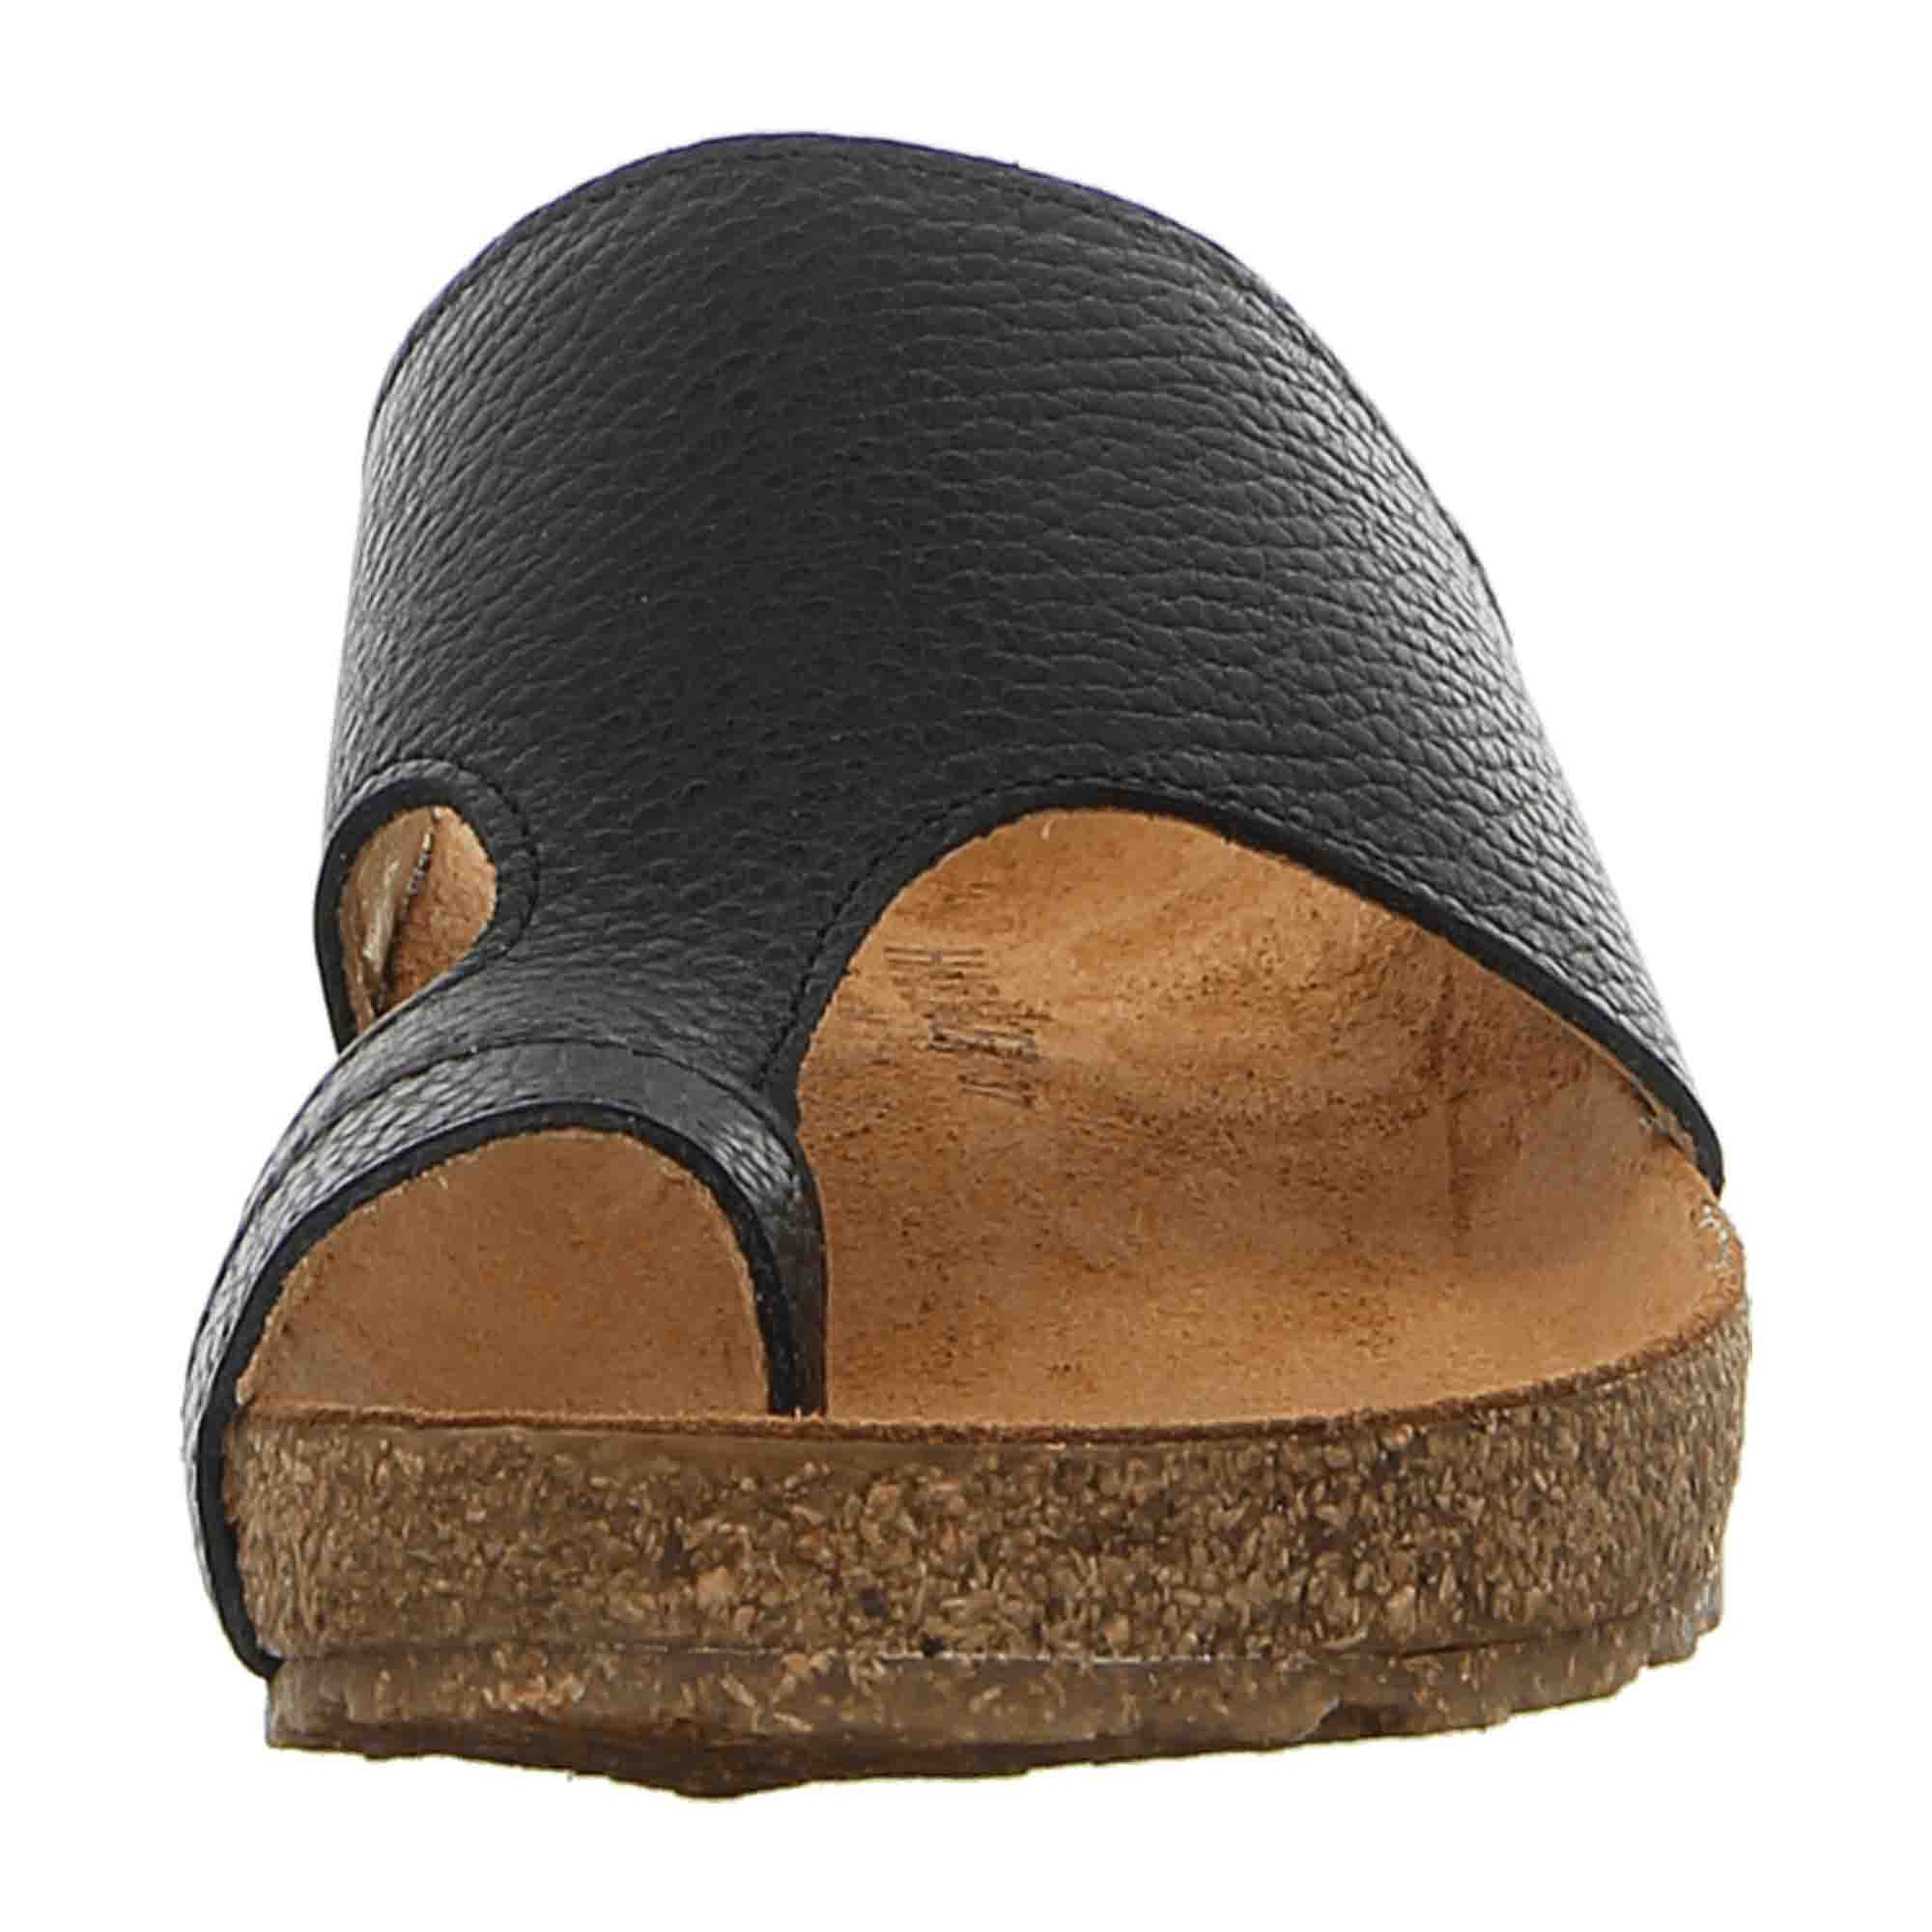 Haflinger Bio Anka Women's Sandals - Eco-Friendly, Stylish Black Leather